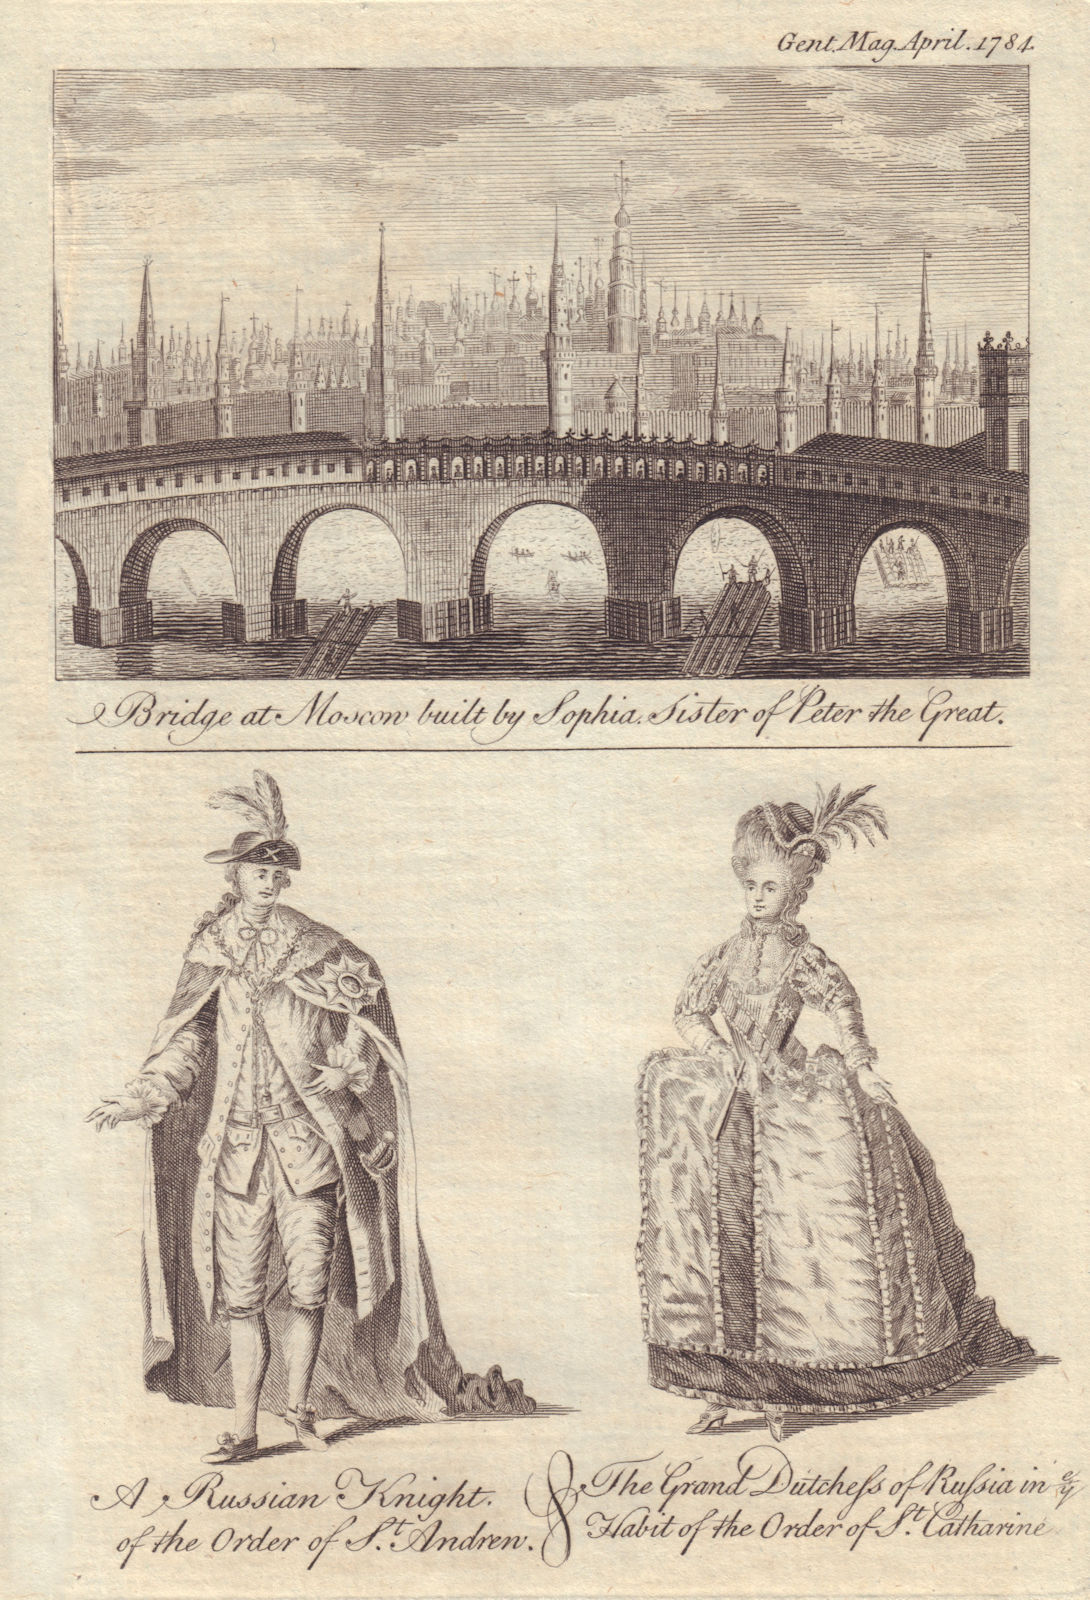 Bolshoy Kamenny Bridge, Moscow. Russian Knight of St. Andrew. Grand Duchess 1784